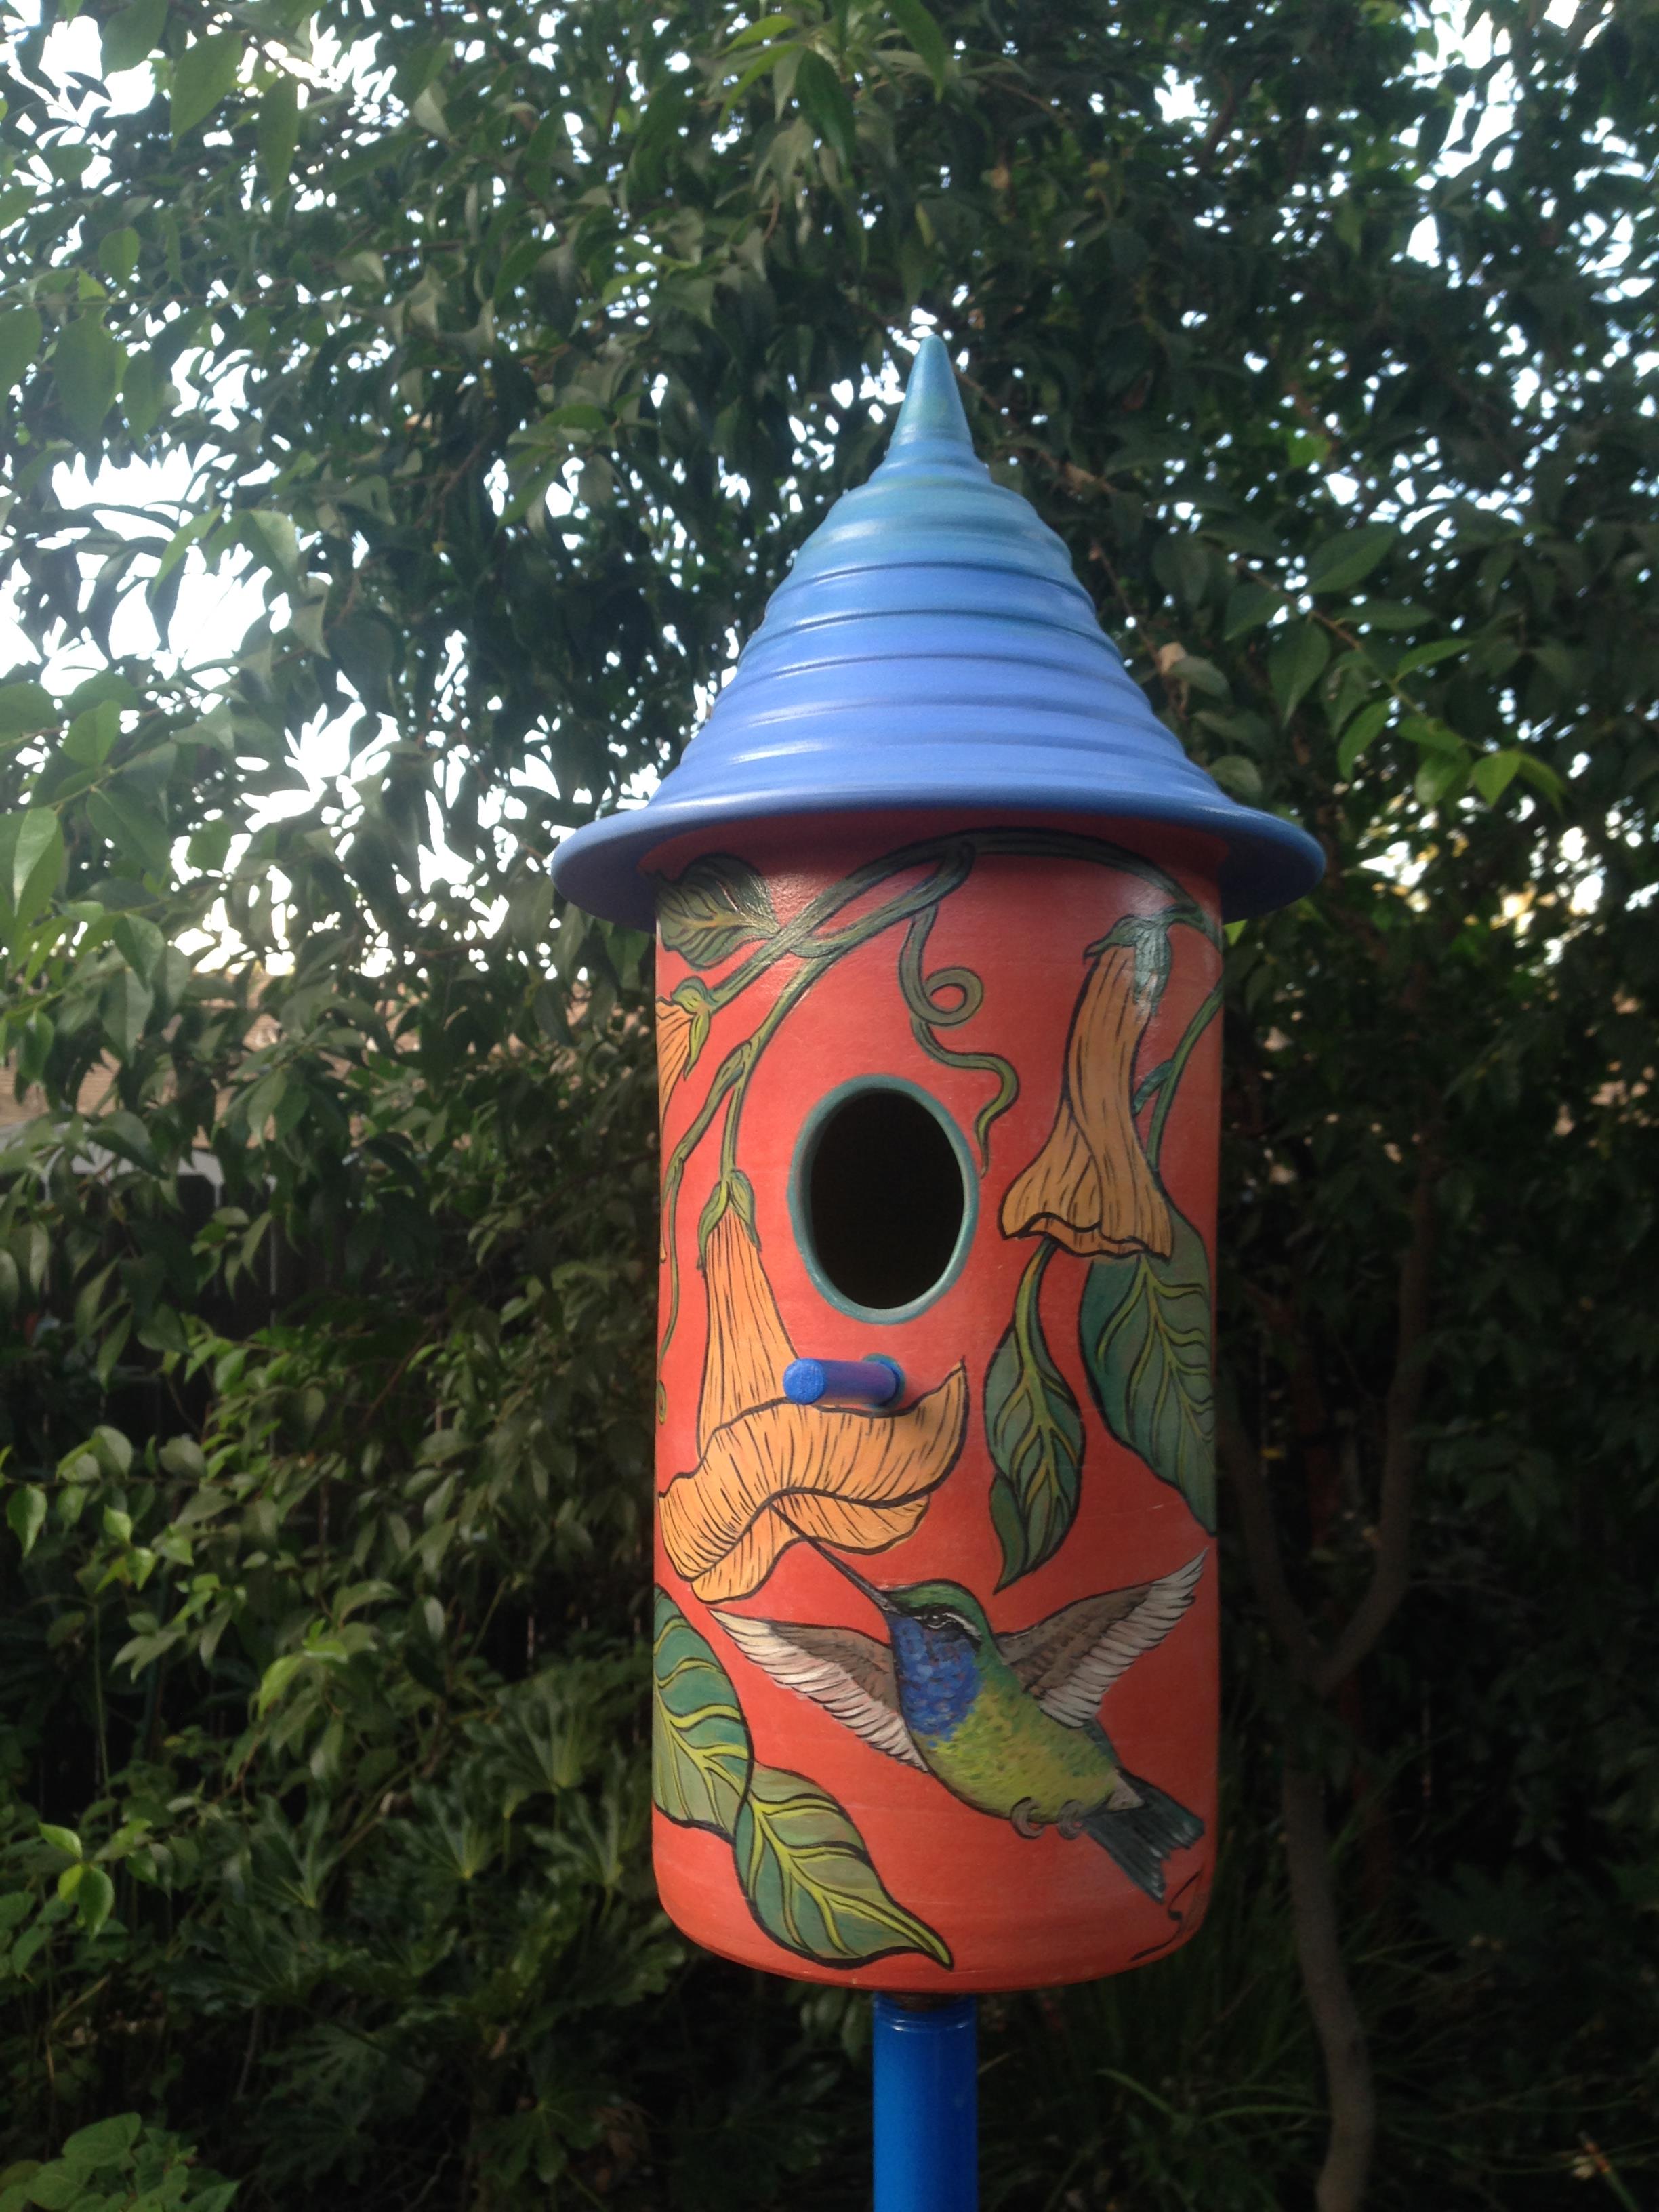 Colorful Ceramic Birdhouse with Hummingbird design